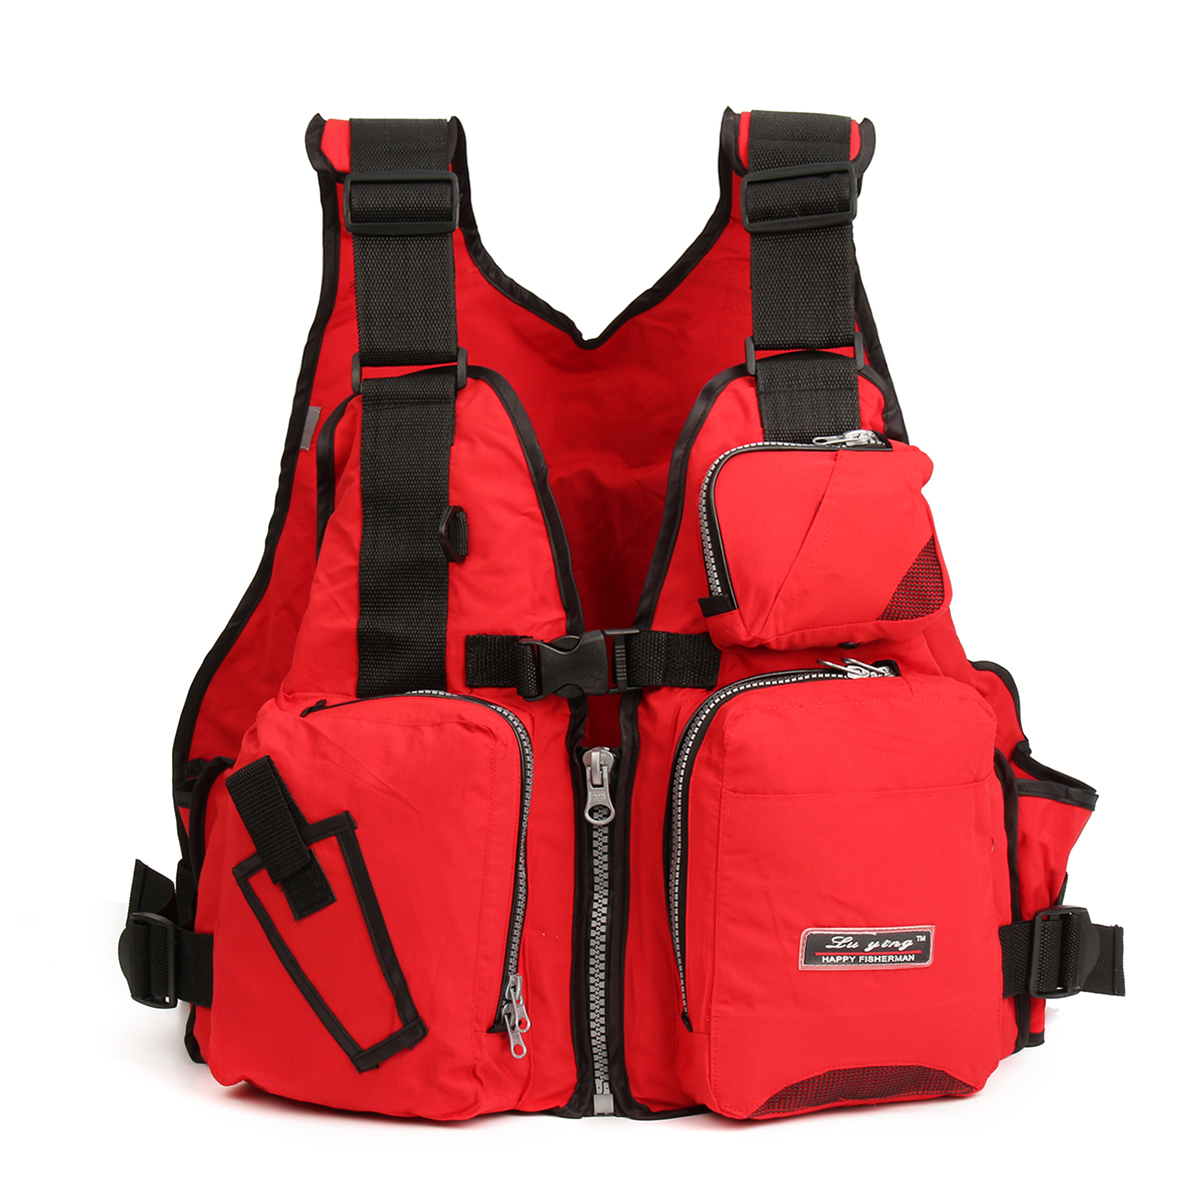 Outdoor Life Jackets for Adult kayaking, Multi-Pockets & Reflective Belt, Adjustable Life Vests for Adults, Safe Aid Jacket, Buoyancy Waistcoat, Swim Vest for Canoe Dinghy, Sailing - image 2 of 8